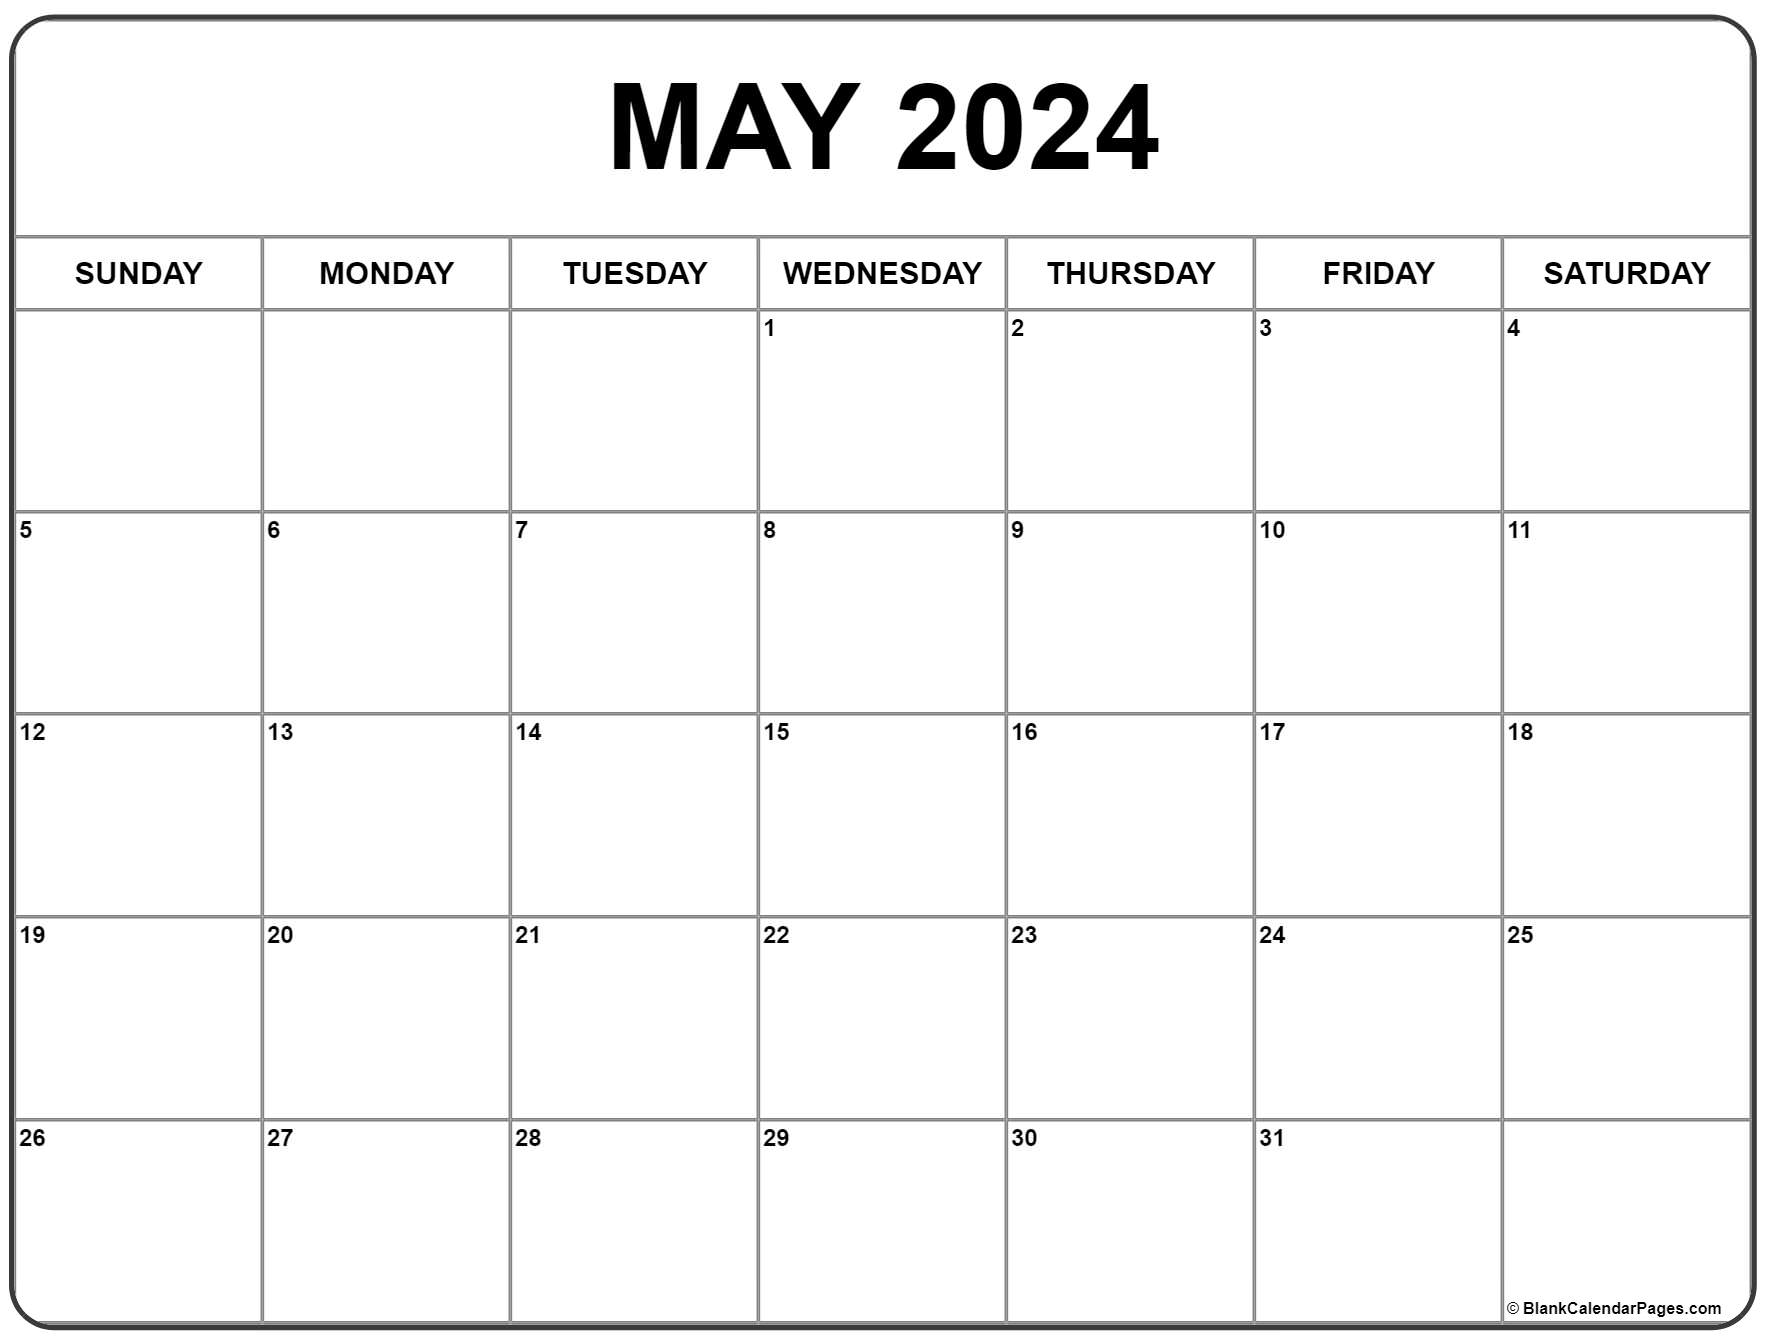 May 2024 Calendar | Free Printable Calendar for May 2024 Monthly Calendar Printable